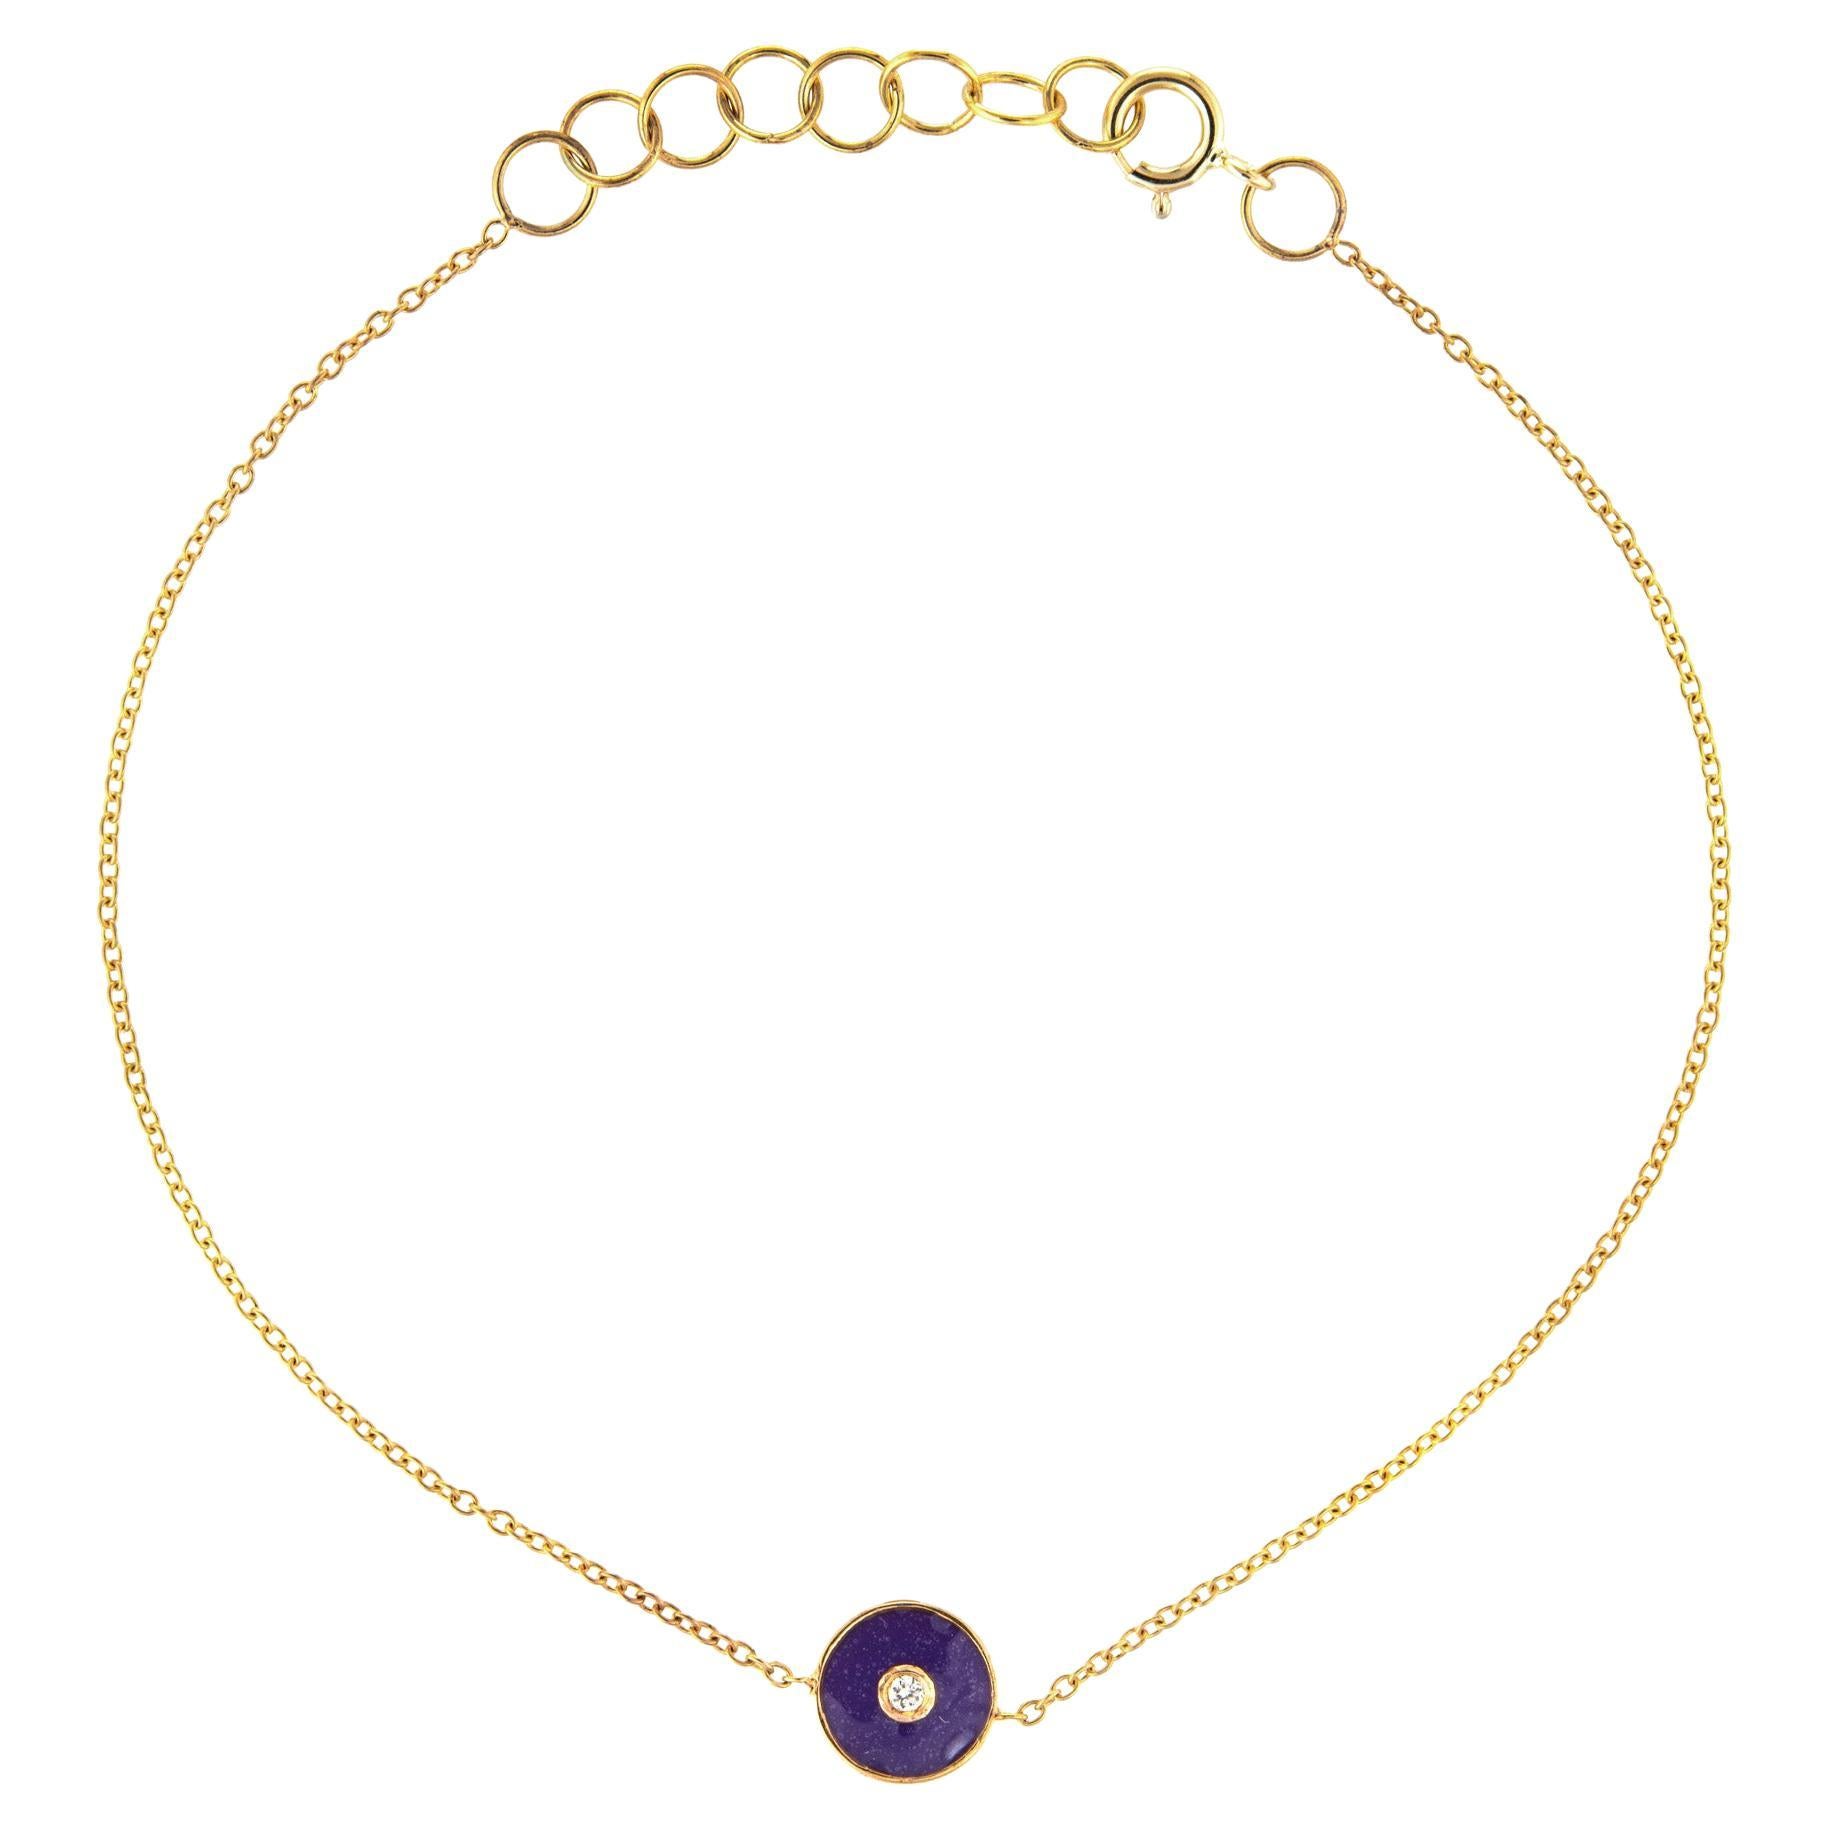 Verstellbare Länge des lila Emaille-Diamant-Armbands 14k Gelbgold